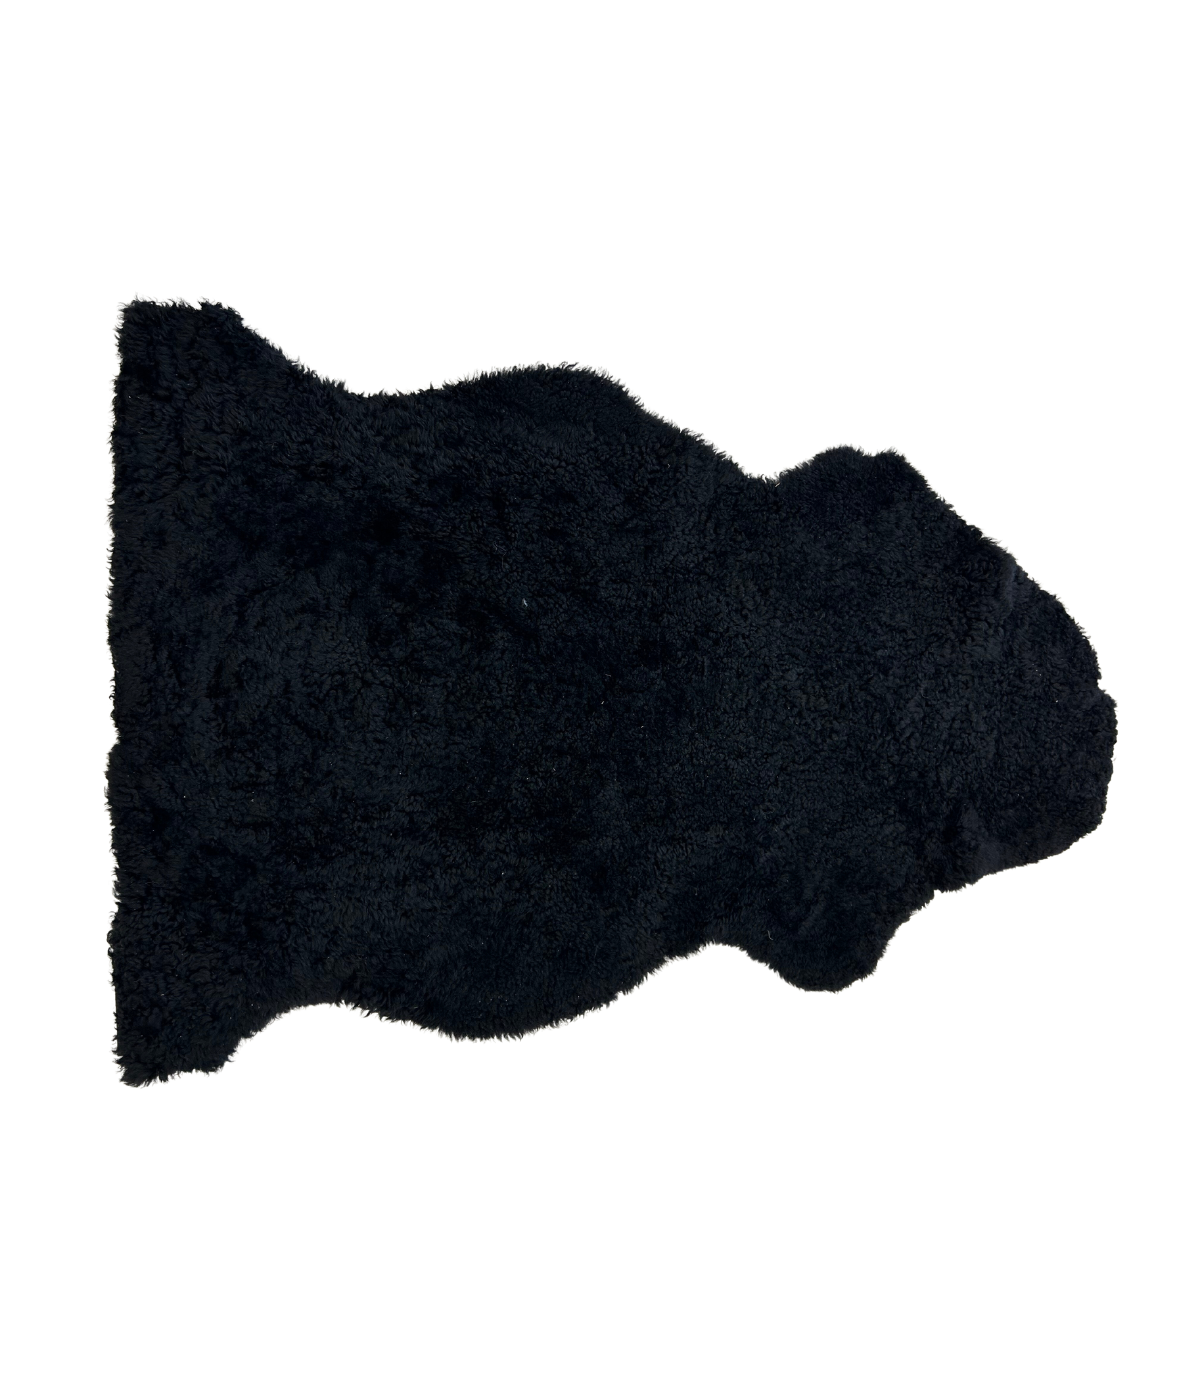 Sheepskin Rug - Black